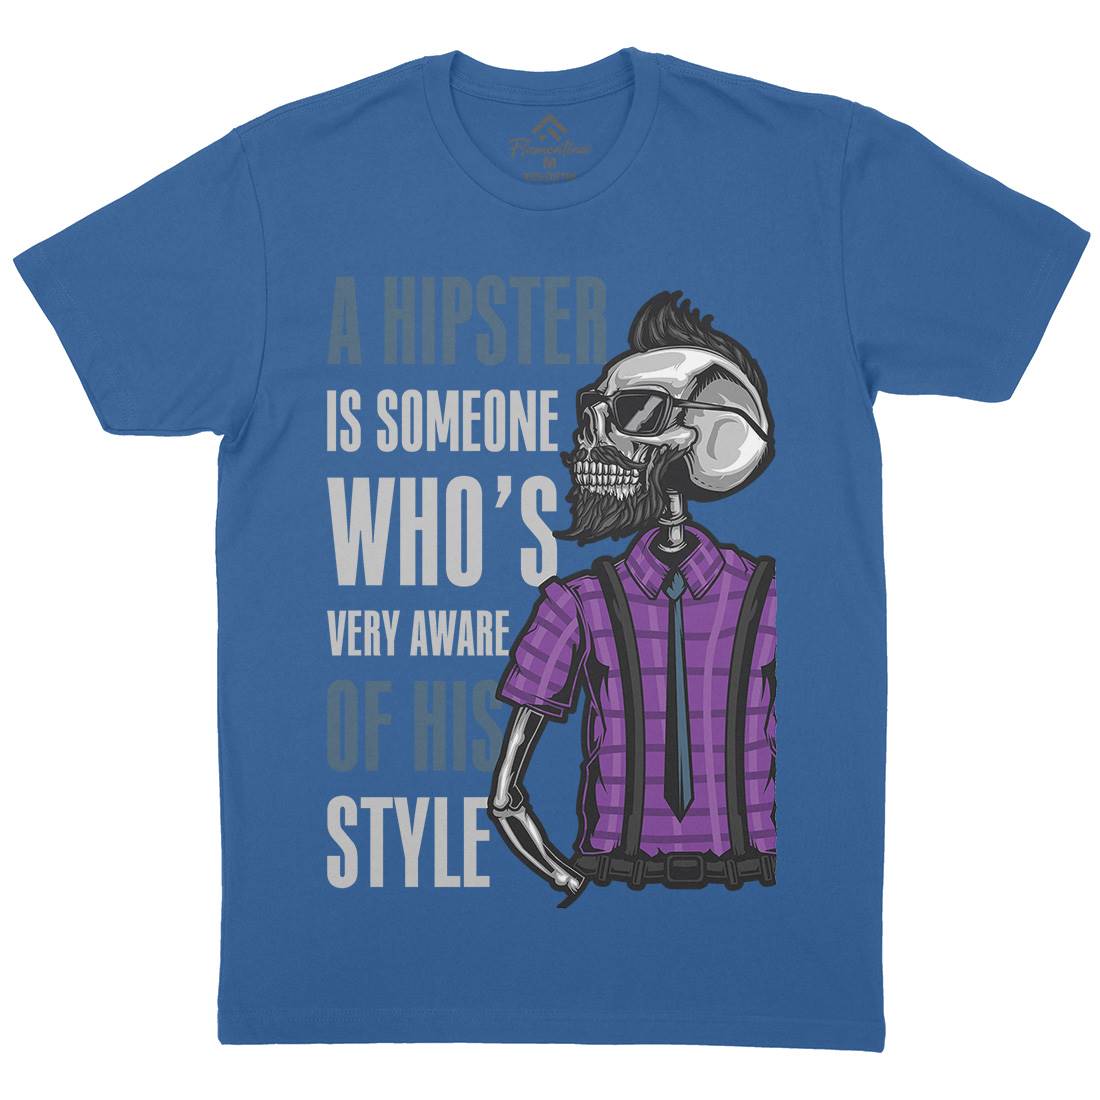 Hipster Mens Organic Crew Neck T-Shirt Barber B131